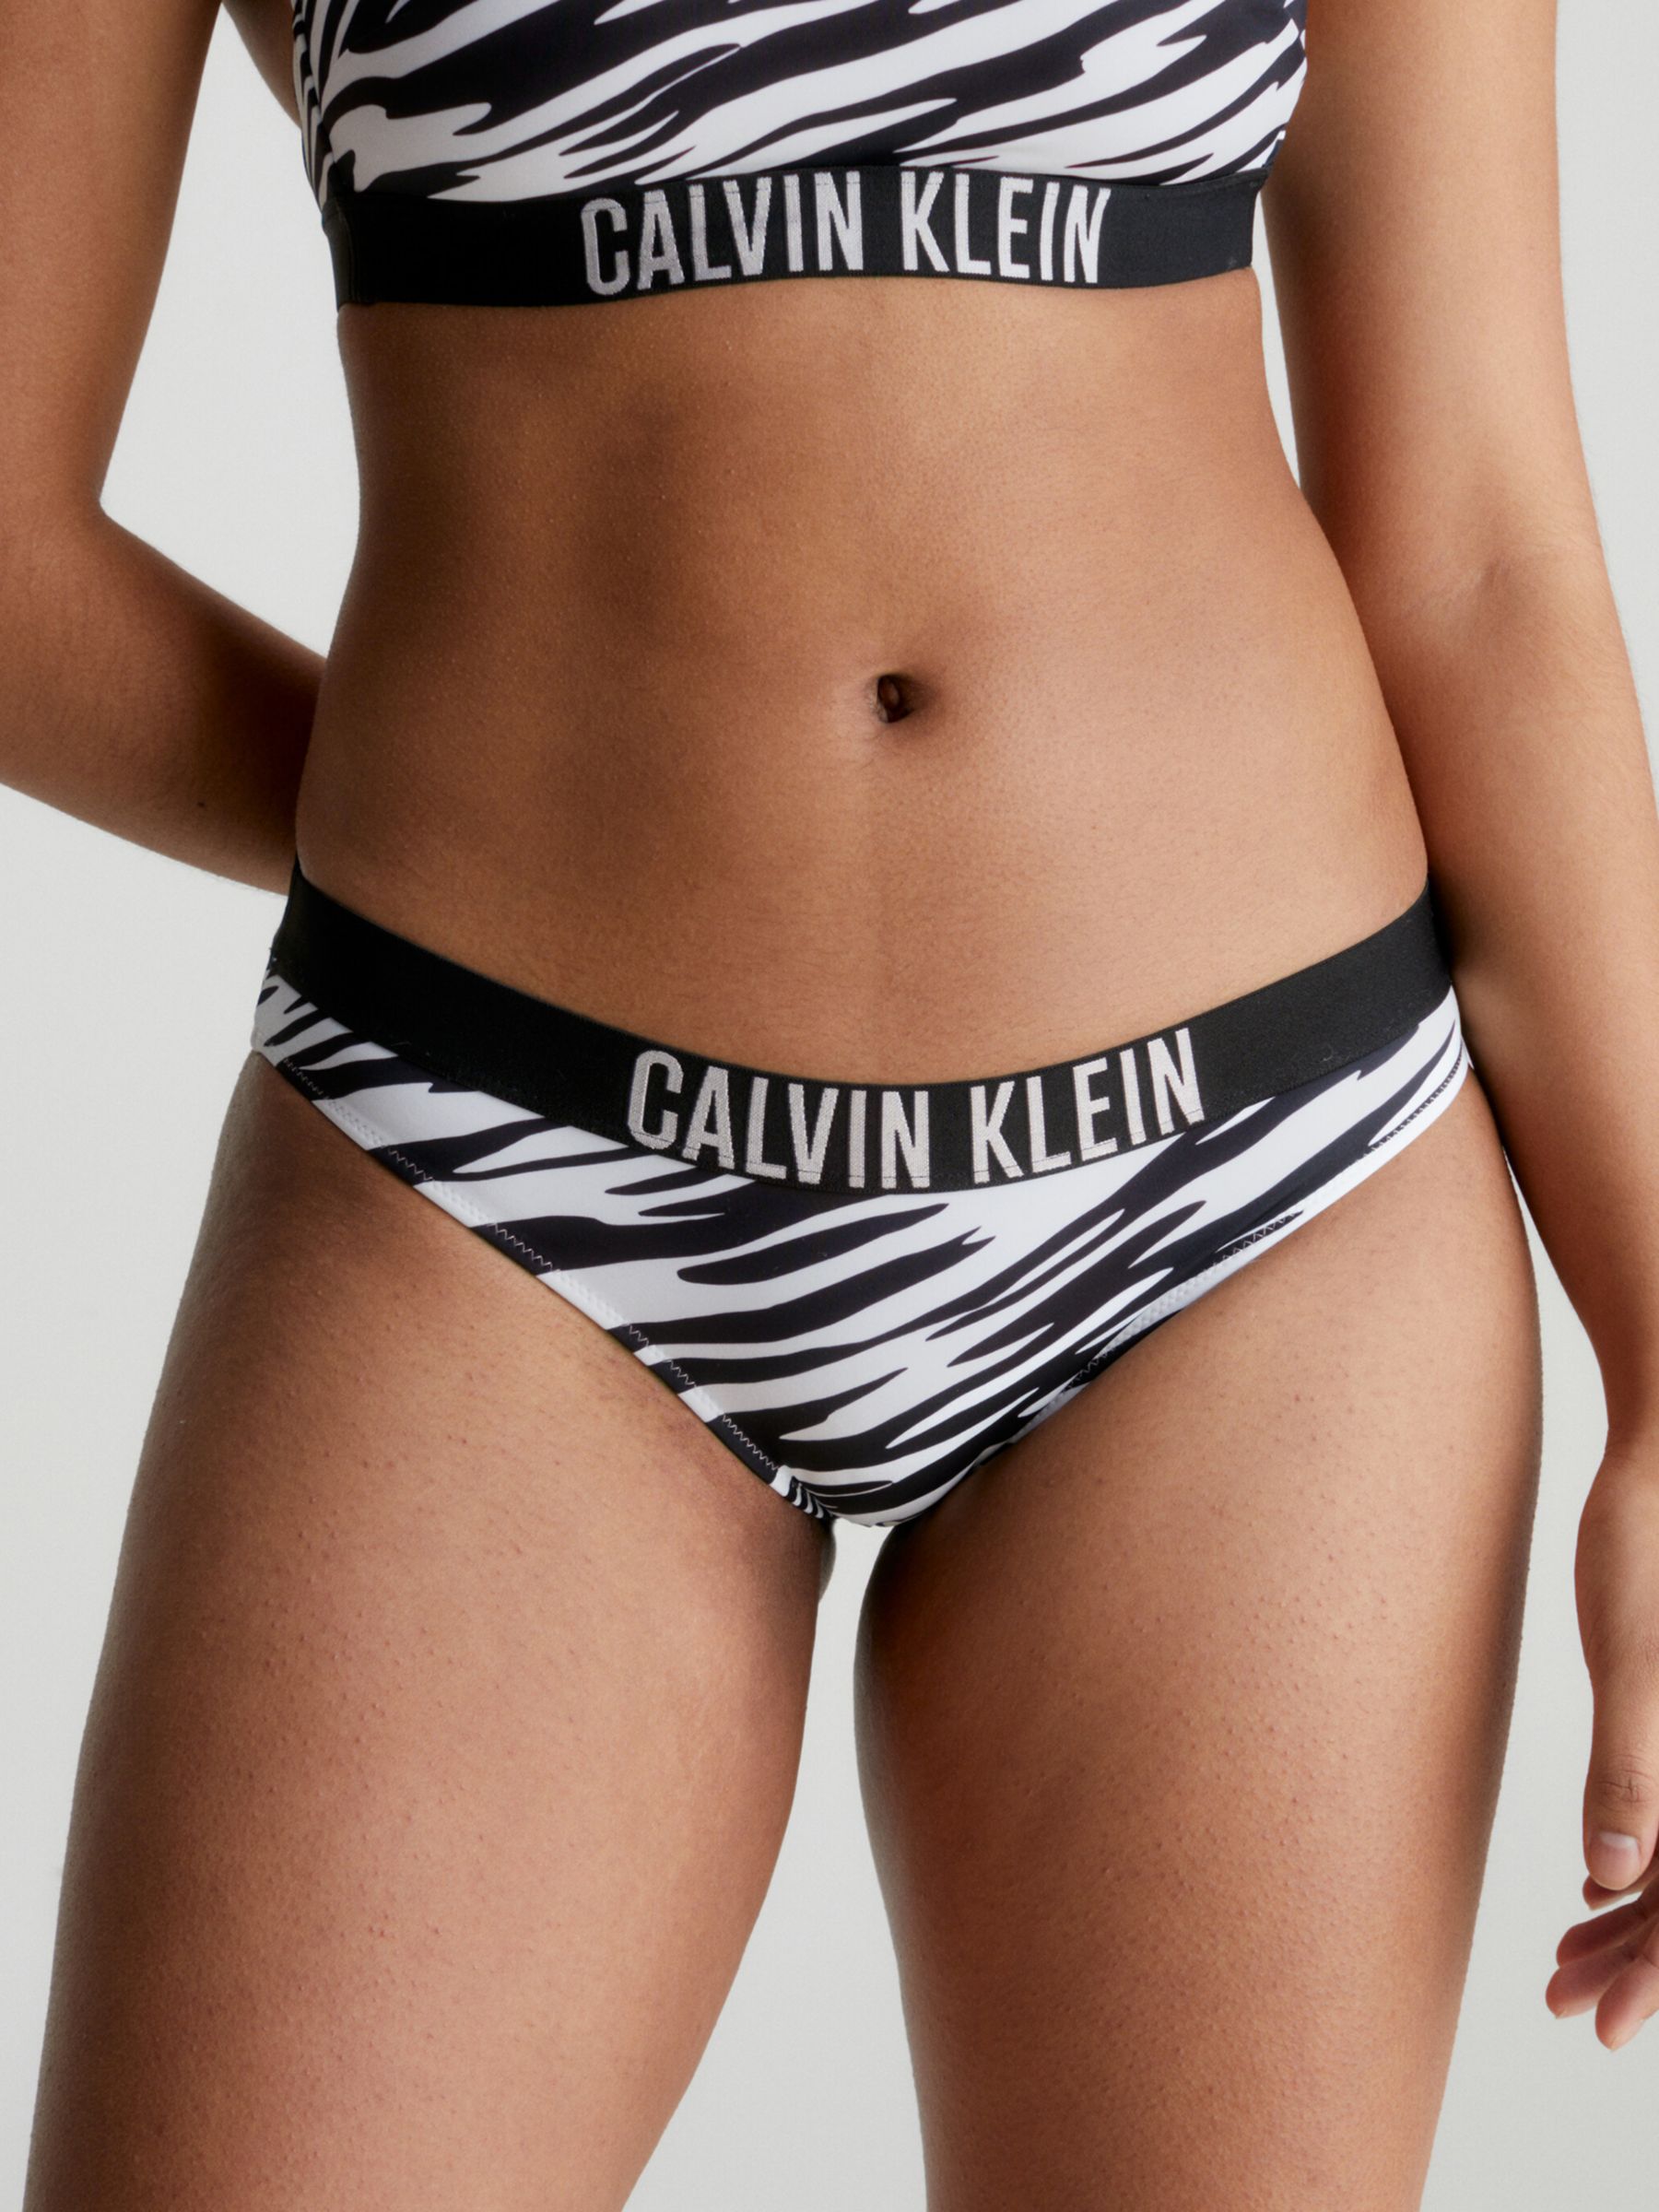 Calvin Klein Intense Power Zebra Bikini Bottoms, Black/White, S